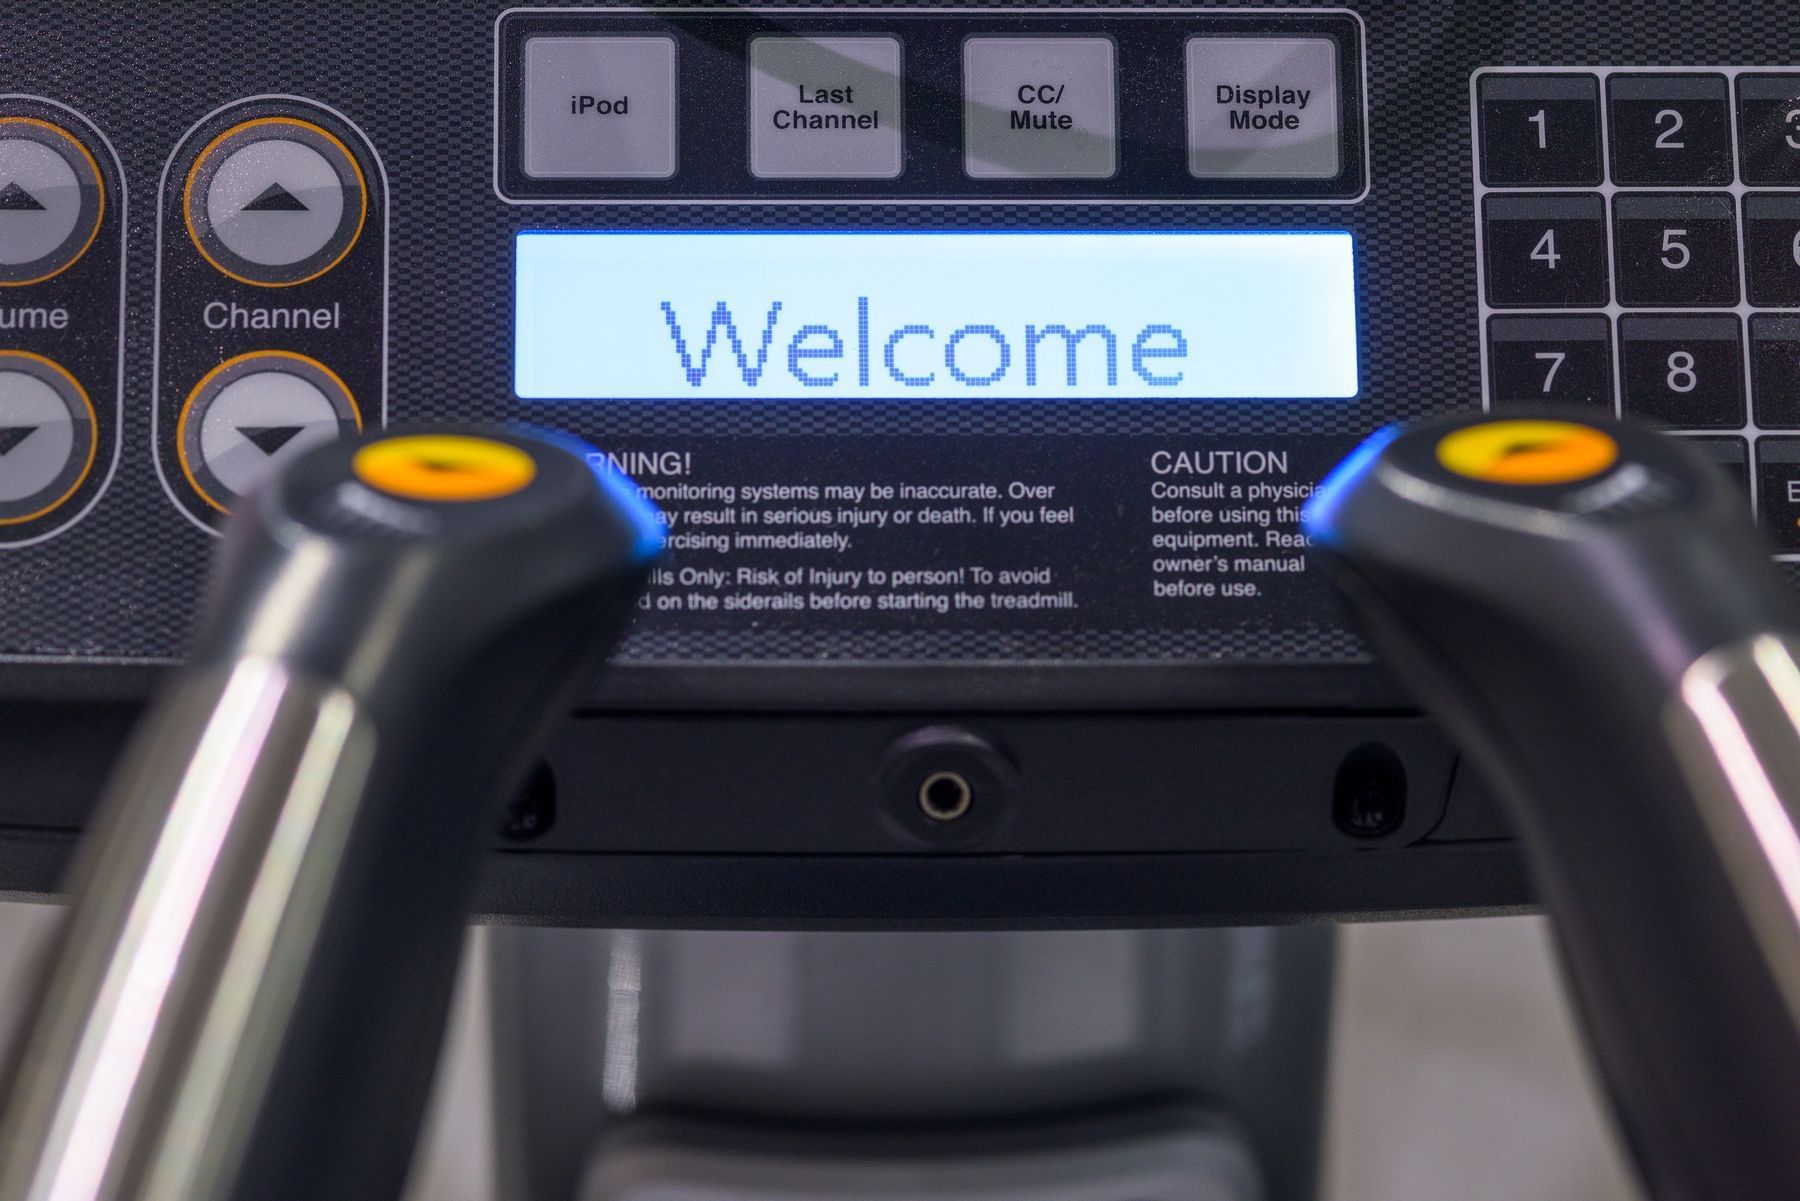 Detail photo of treadmill